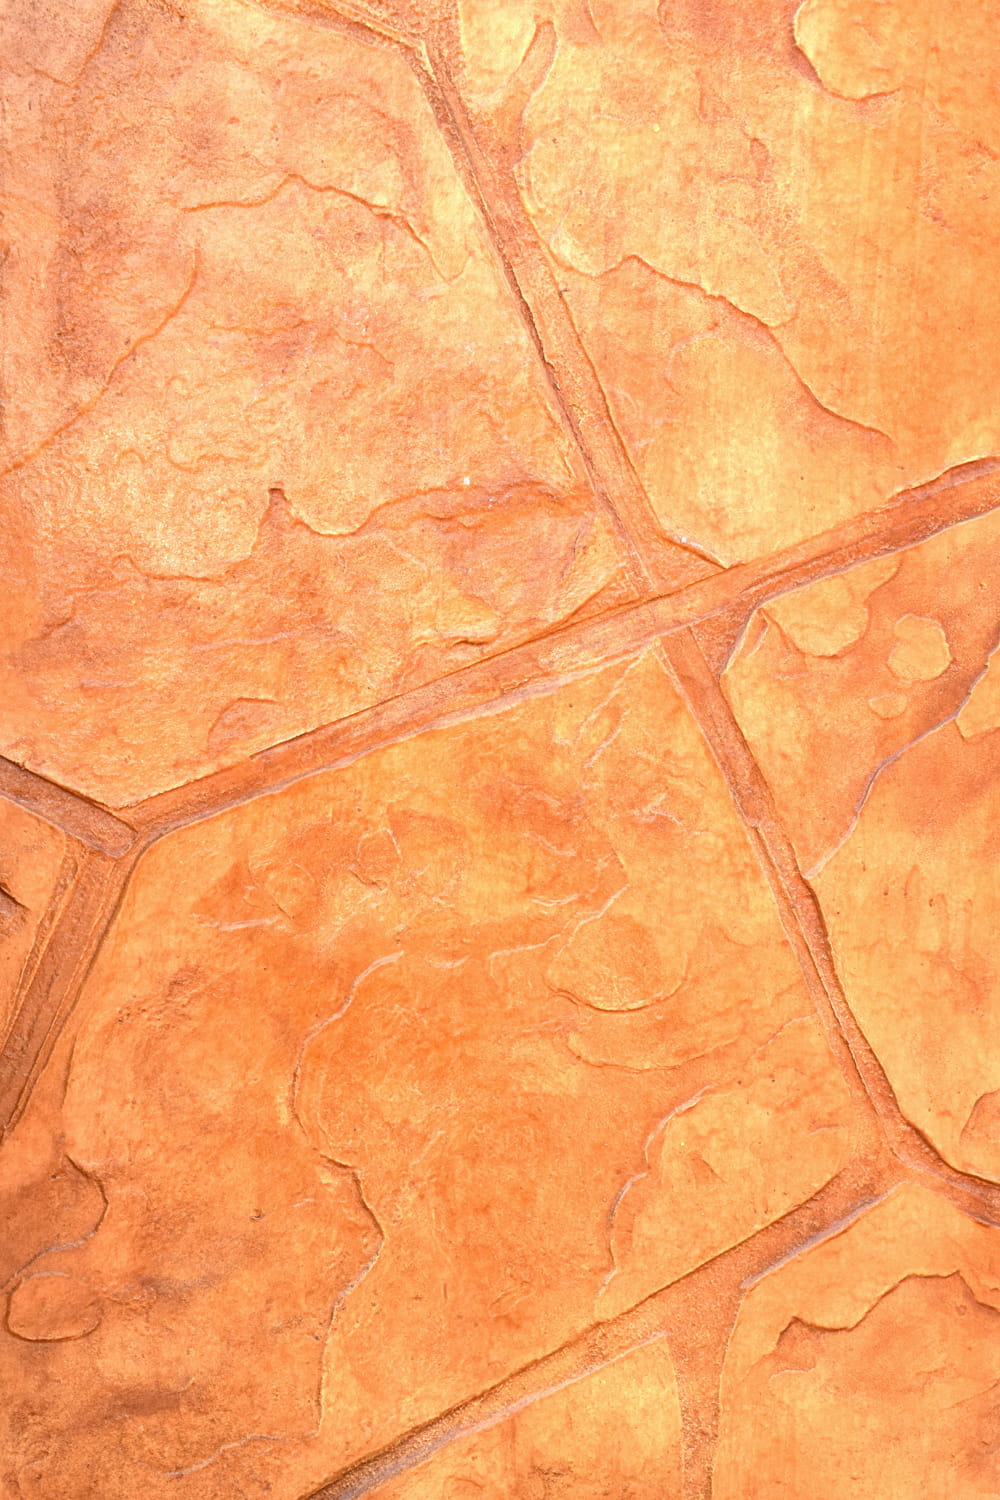 pavimento con concreto estampado imitación piedra naranja